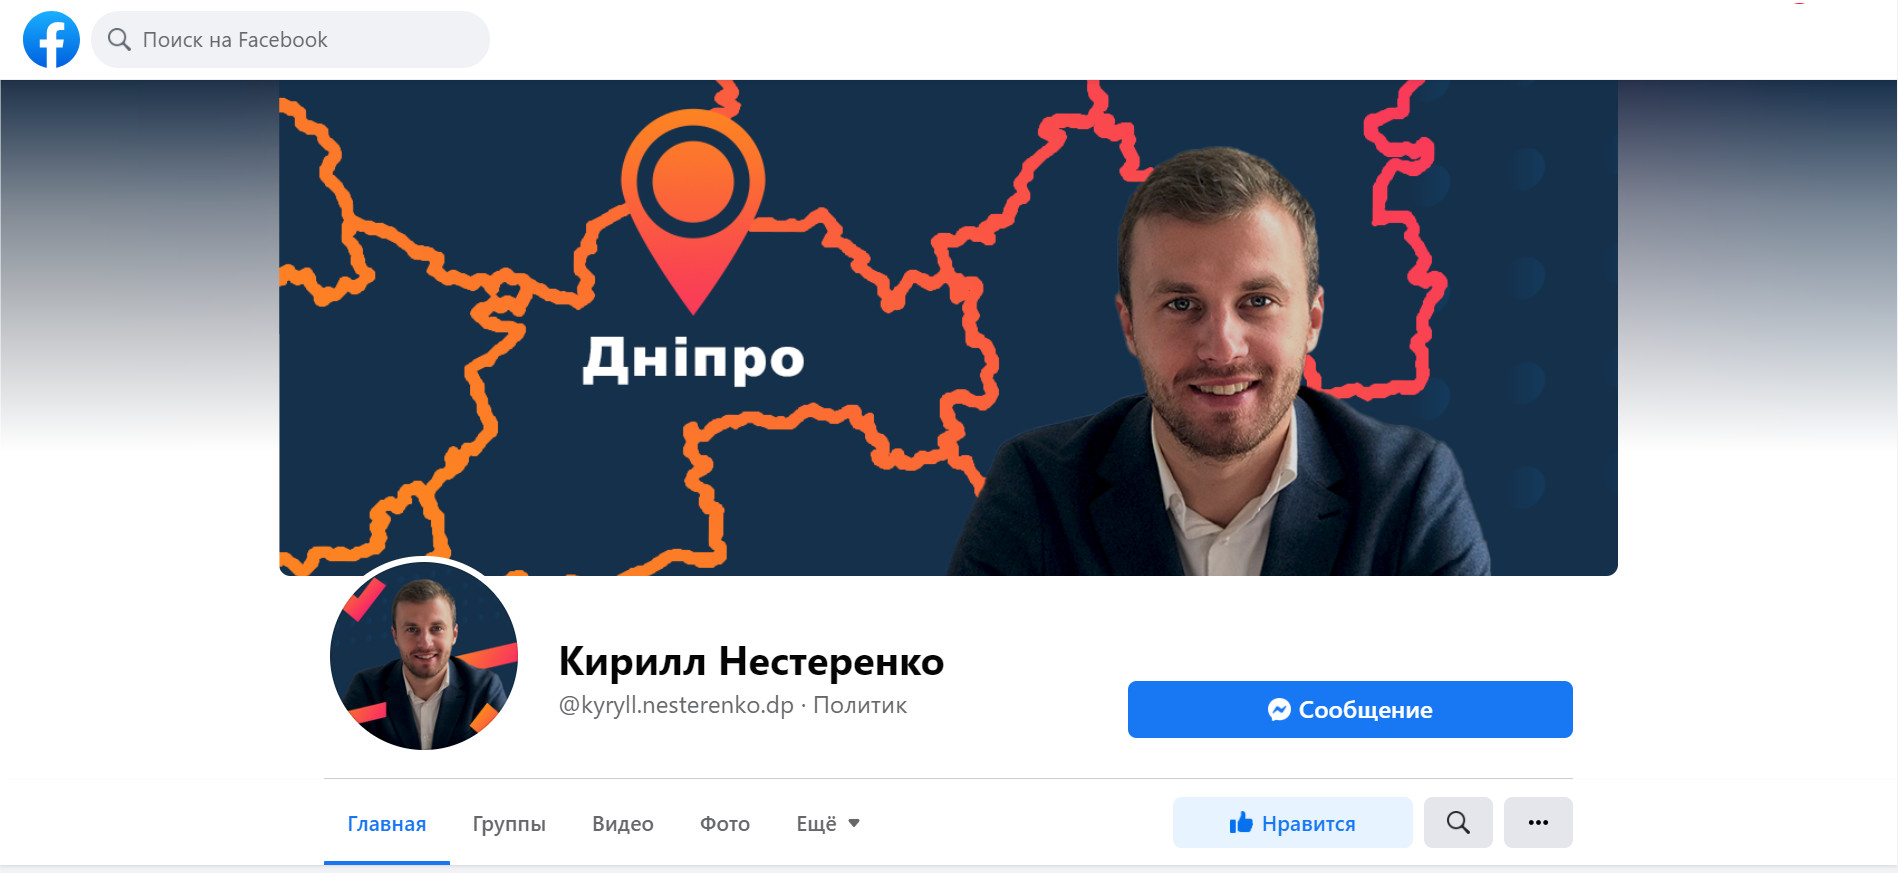 https://www.facebook.com/kyryll.nesterenko.dp